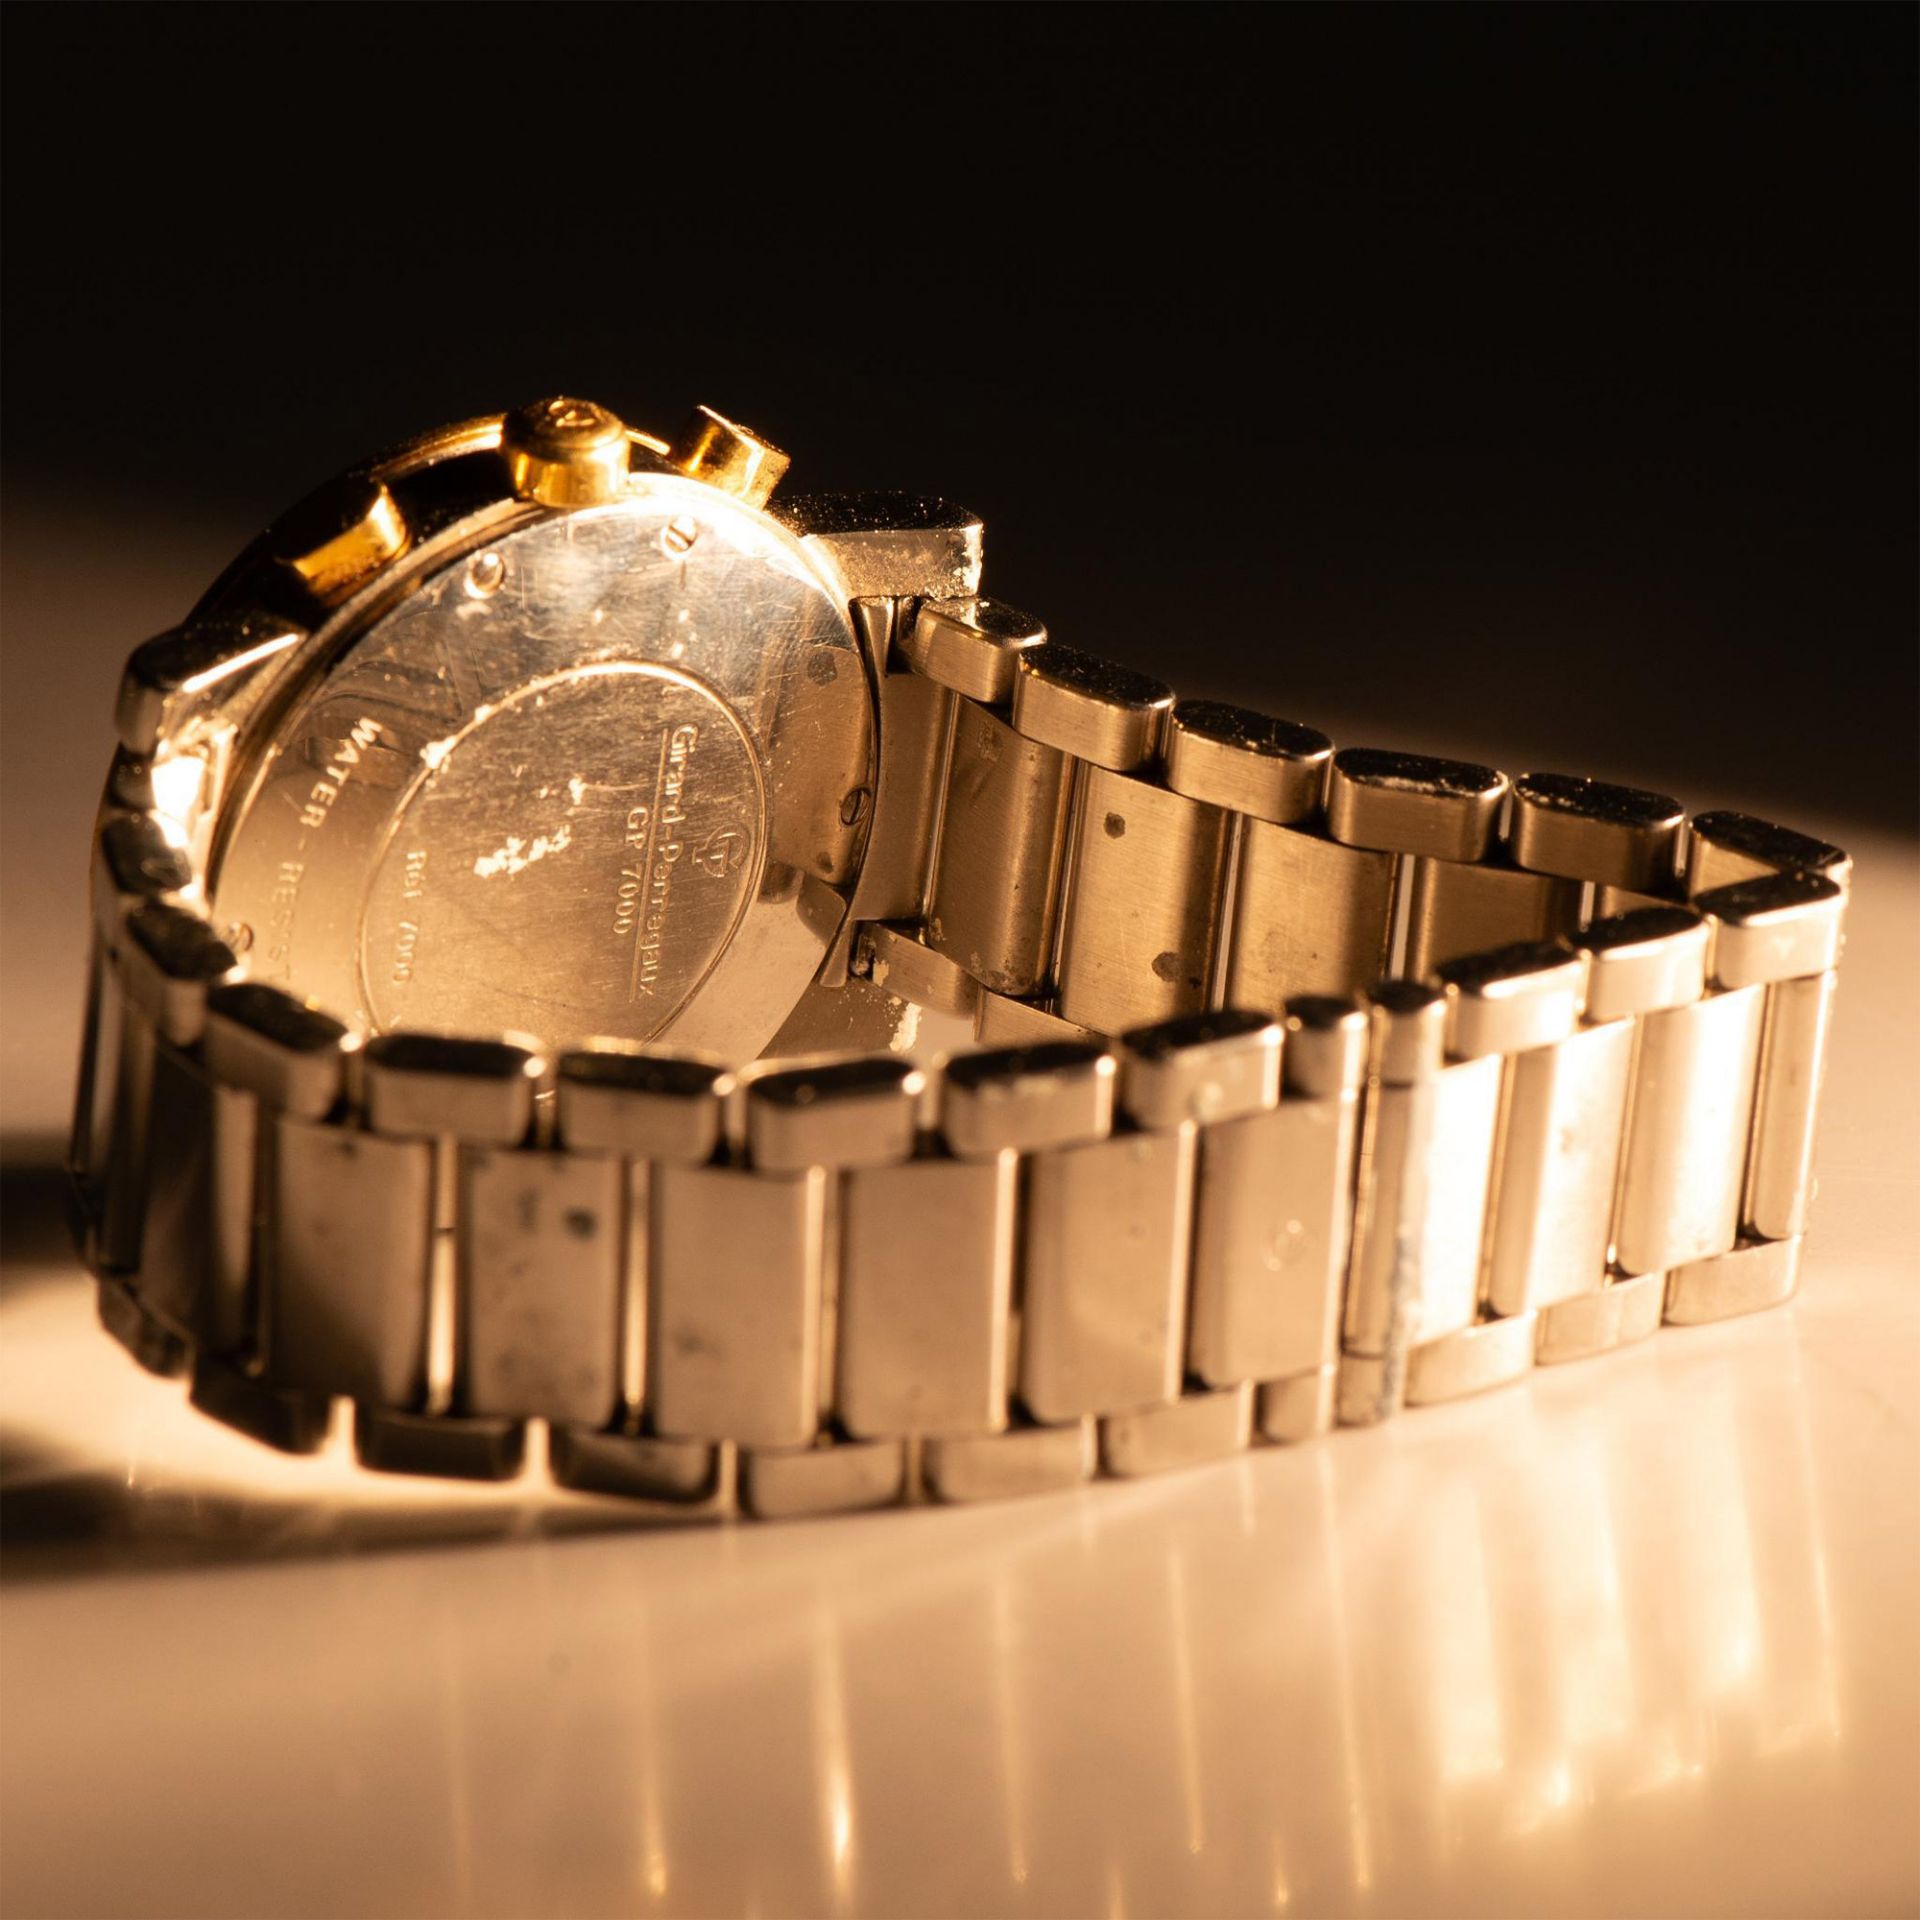 Girard Perregaux 7000 Chrono Automatic Men's Watch - Image 9 of 11